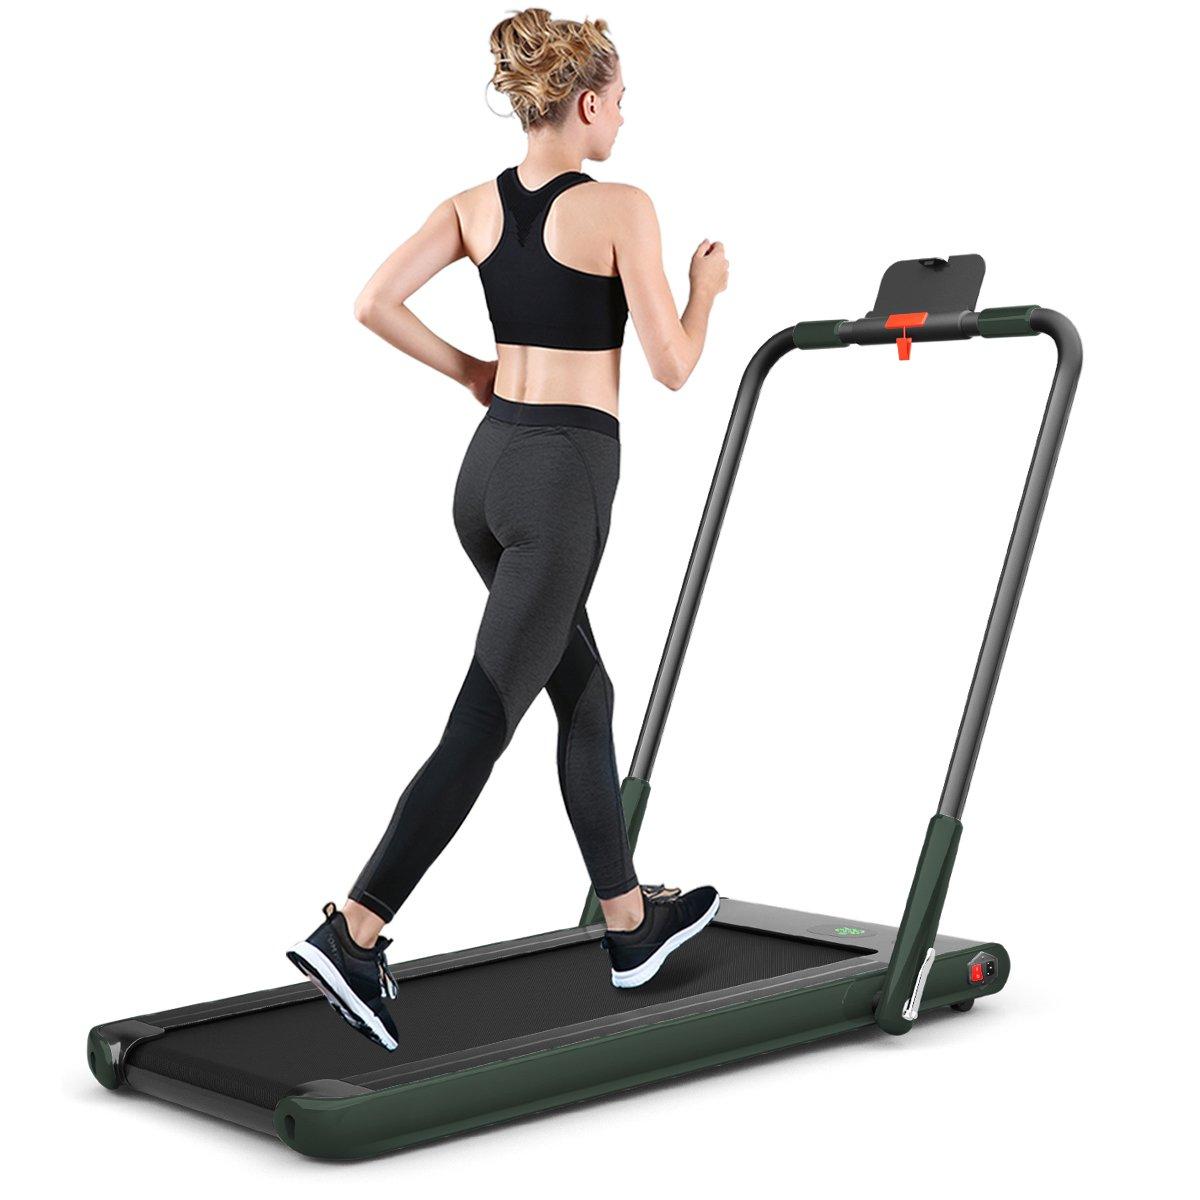 Folding Treadmill 2 In 1 Electric Running Machine Walking Treadmill w/ LED Display Remote Control